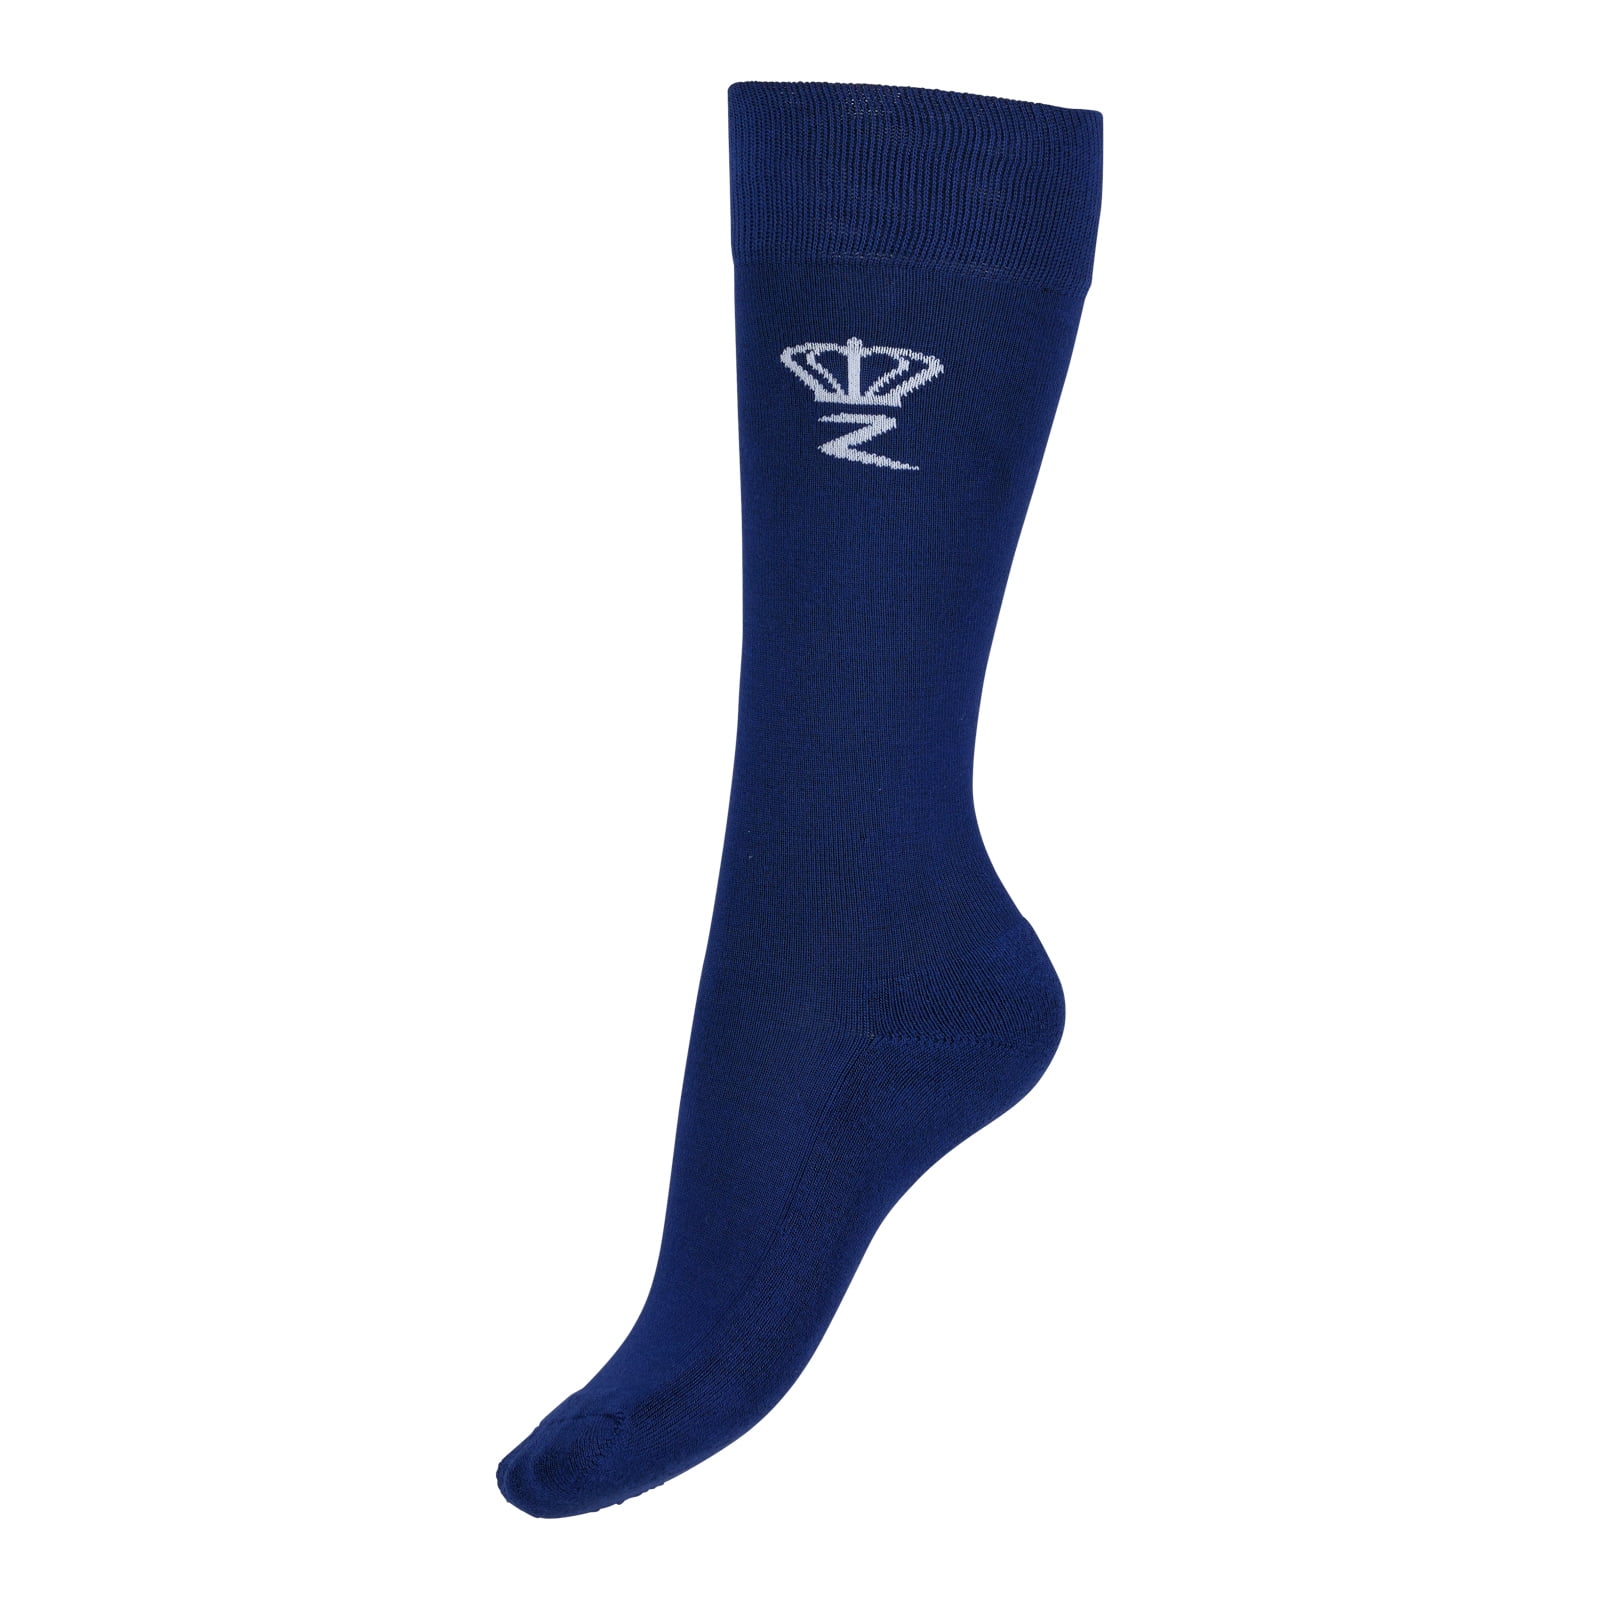 Horze NAVY BLUE Junior Adult Bamboo-Viscose Soft Stretchable Breathable Socks 